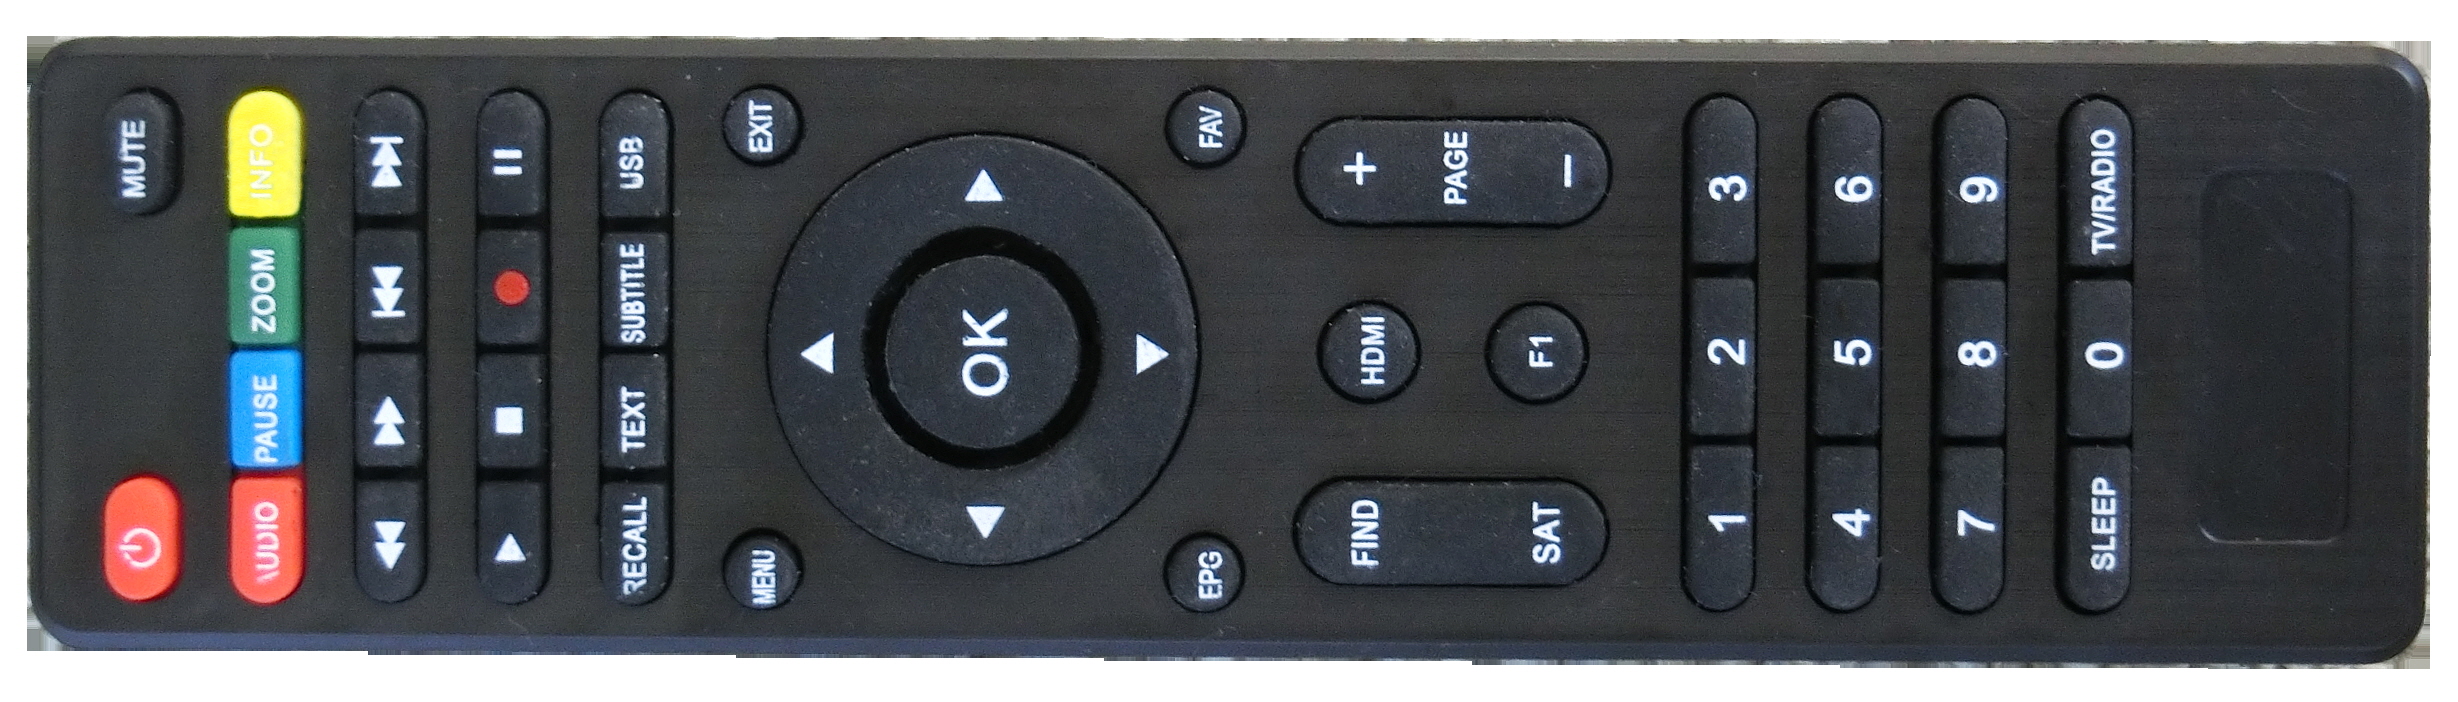 Multiview remote